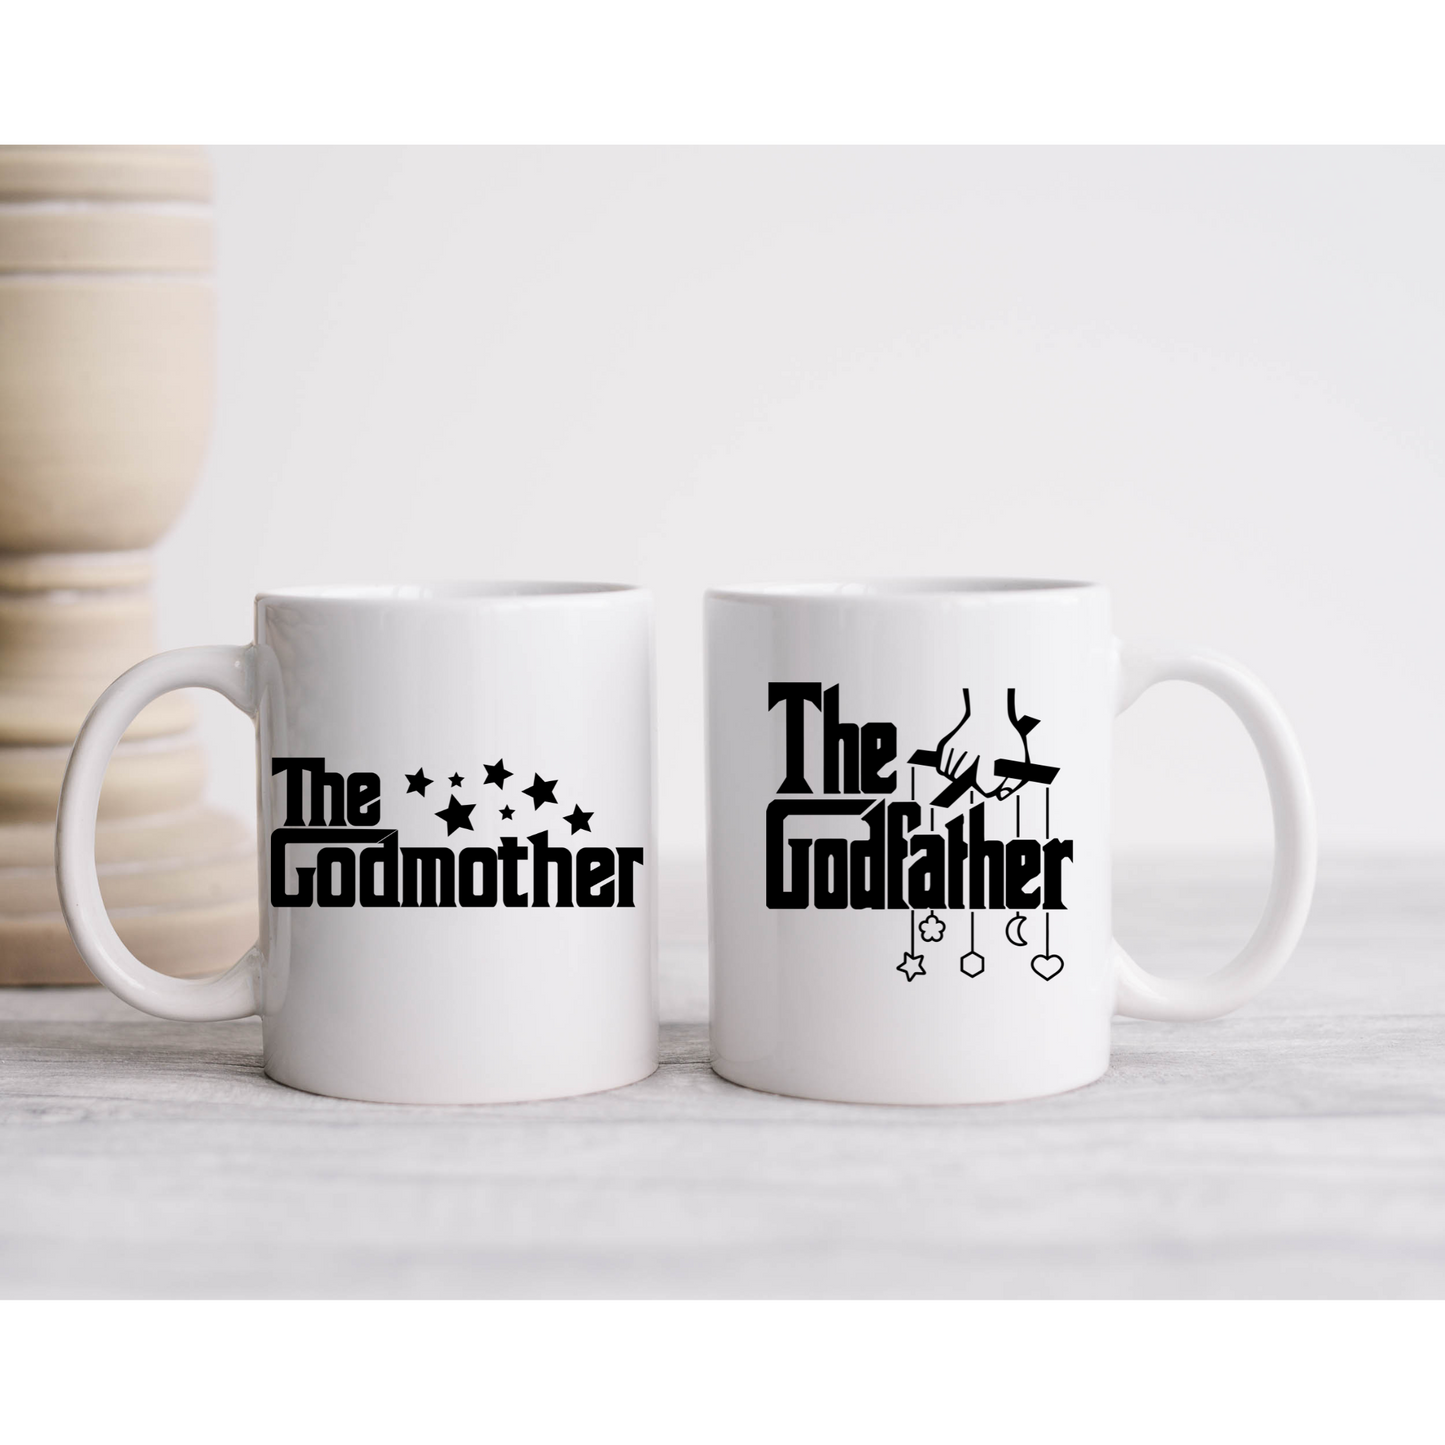 Godmother/Godfather 11oz Ceramic Mug